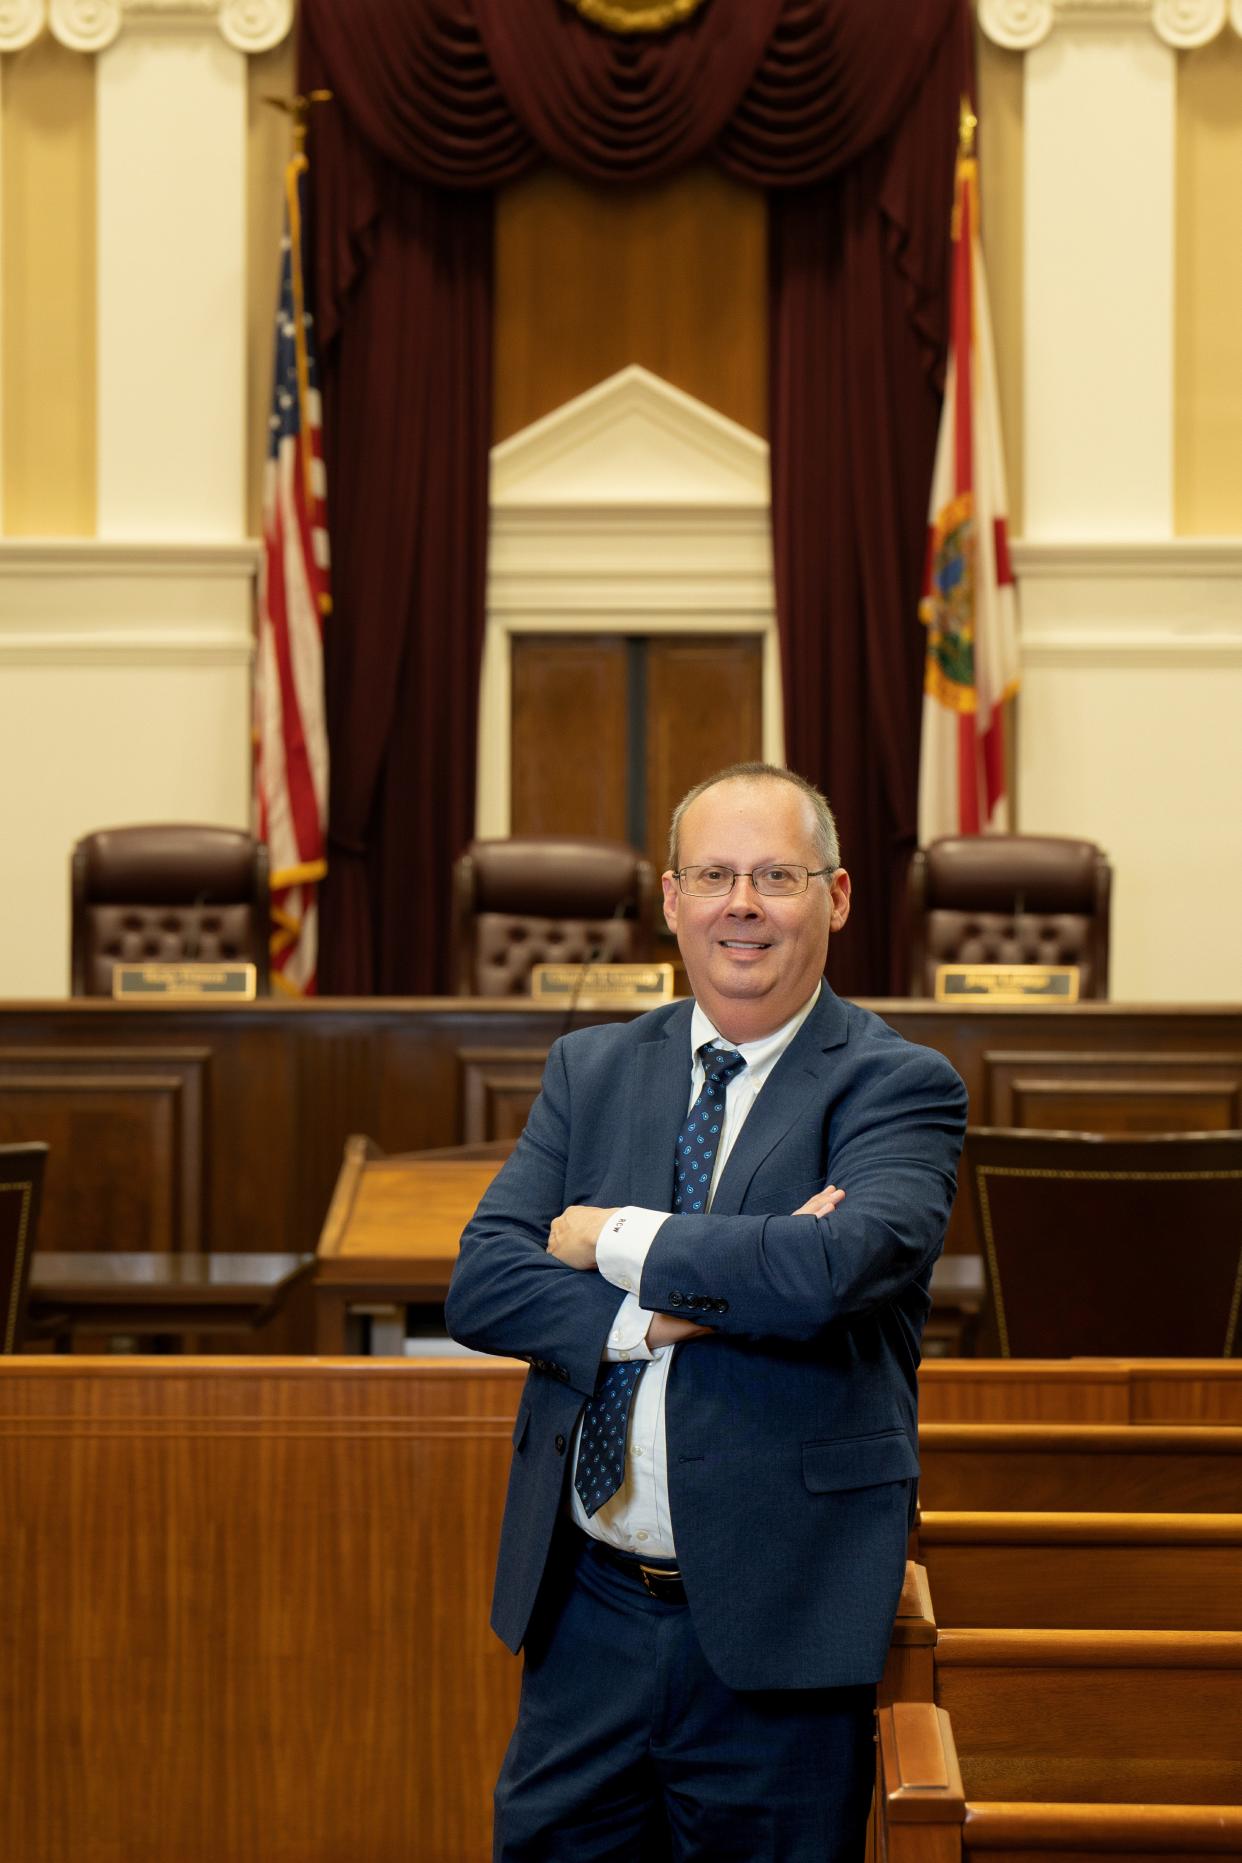 Retiring Florida Supreme Court spokesman Craig Waters